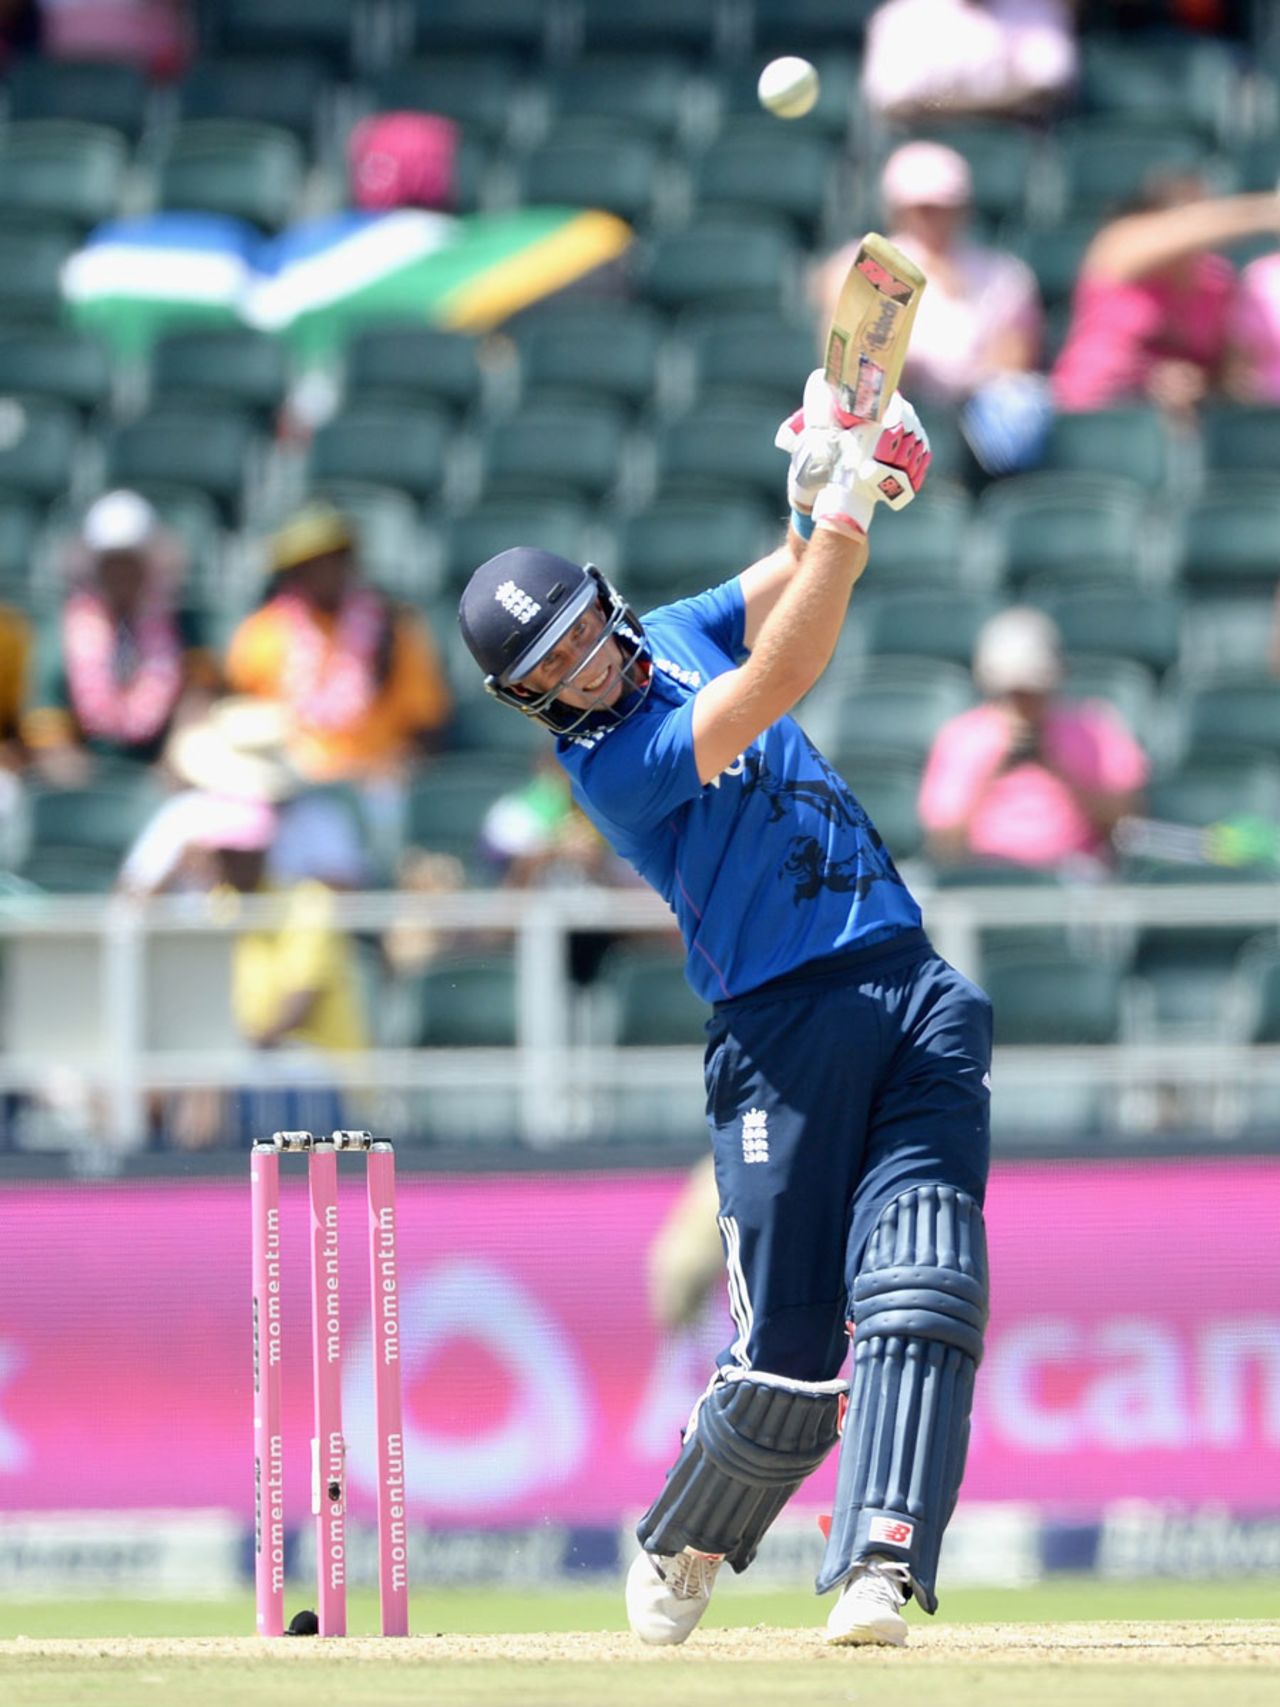 Joe Root drives over the top, South Africa v England, 4th ODI, Johannesburg, February 12, 2016